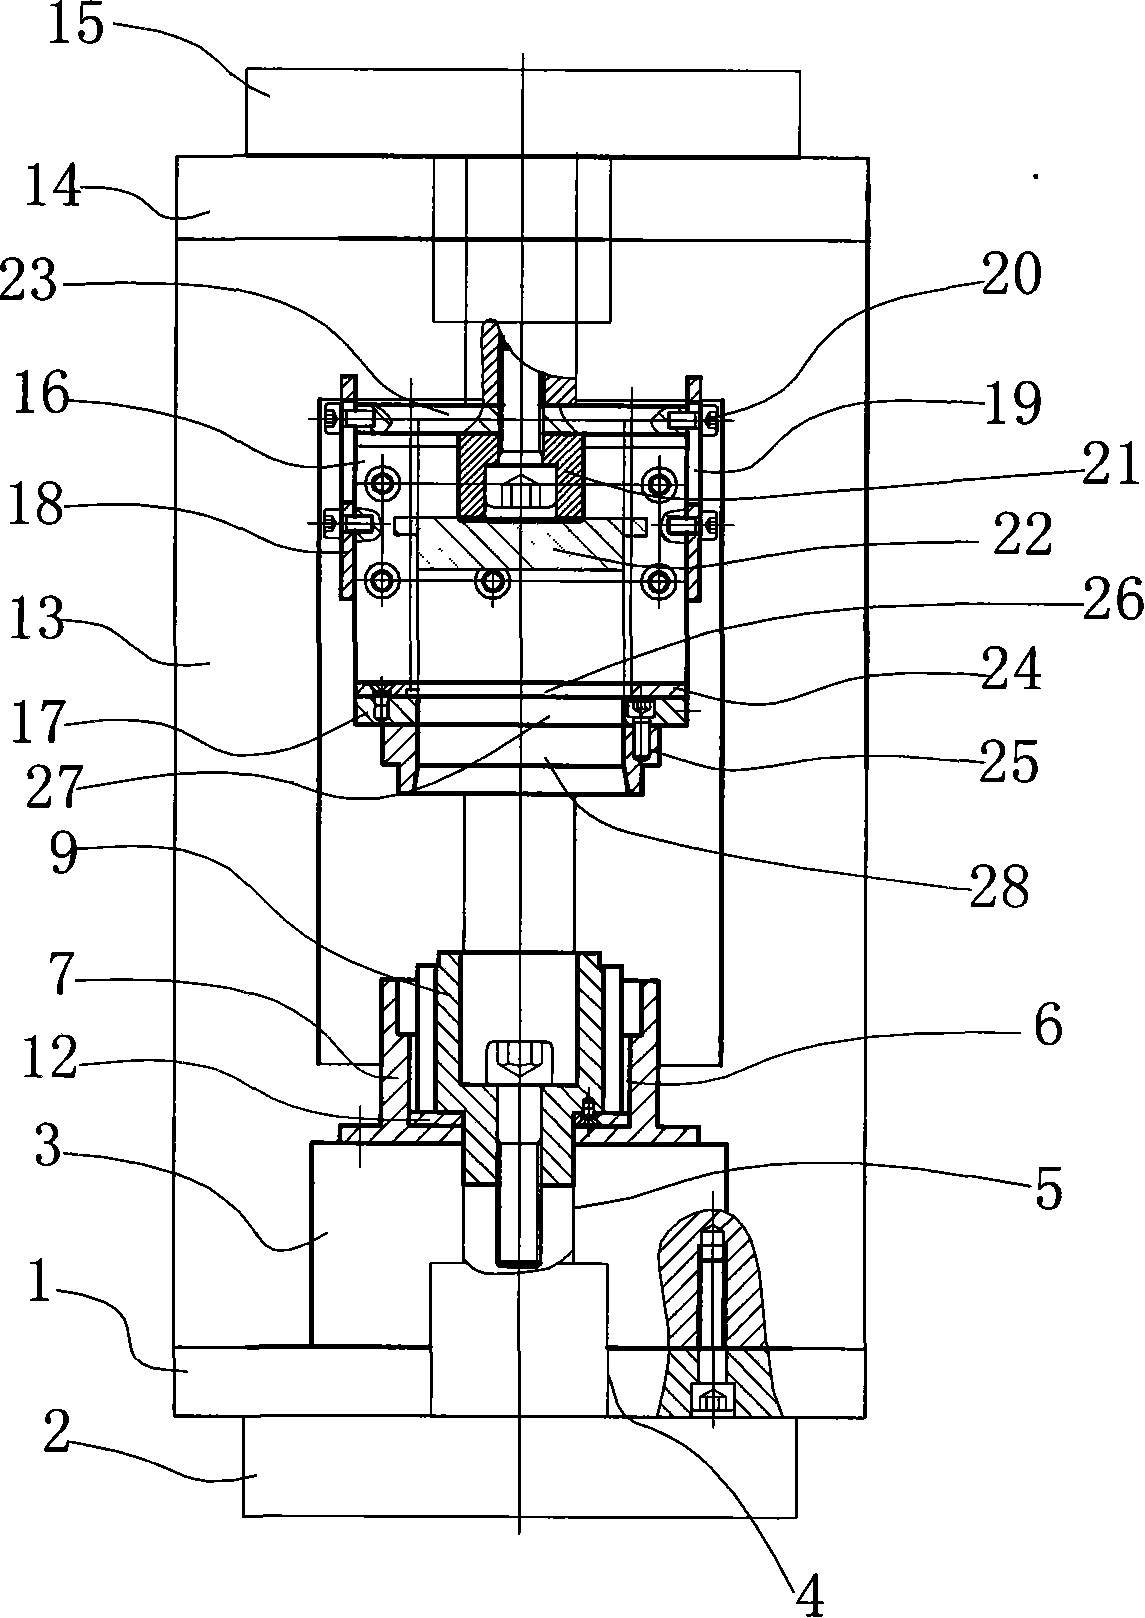 Multipolar magnetic shoe assembling device